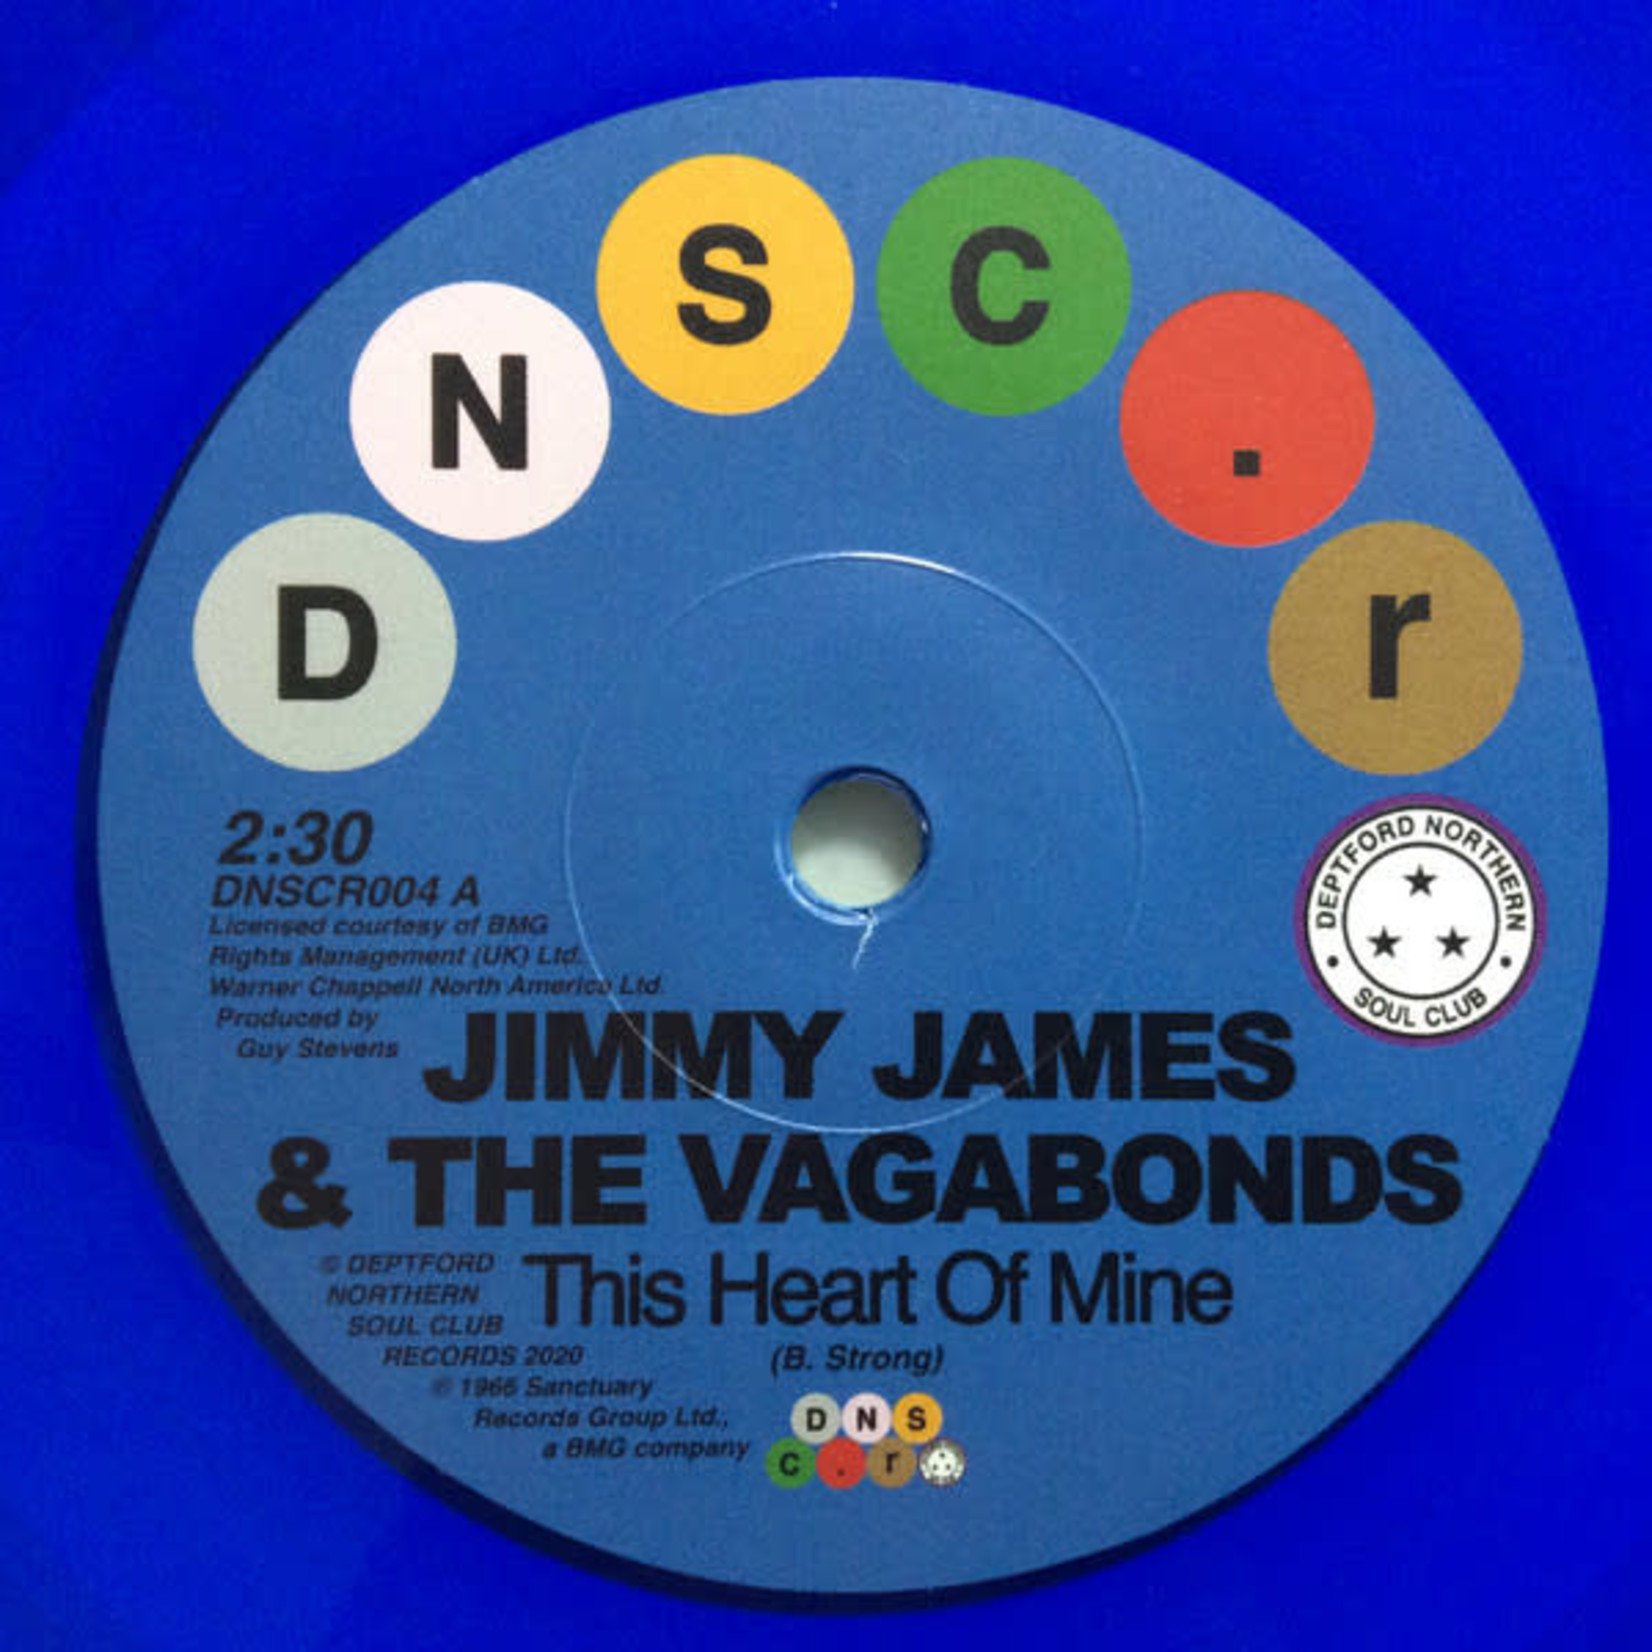 [7"] Jimmy James & The Vagabonds / Sonya Spence - This Heart of Mine b/w Let Love Flow On (7", blue vinyl)